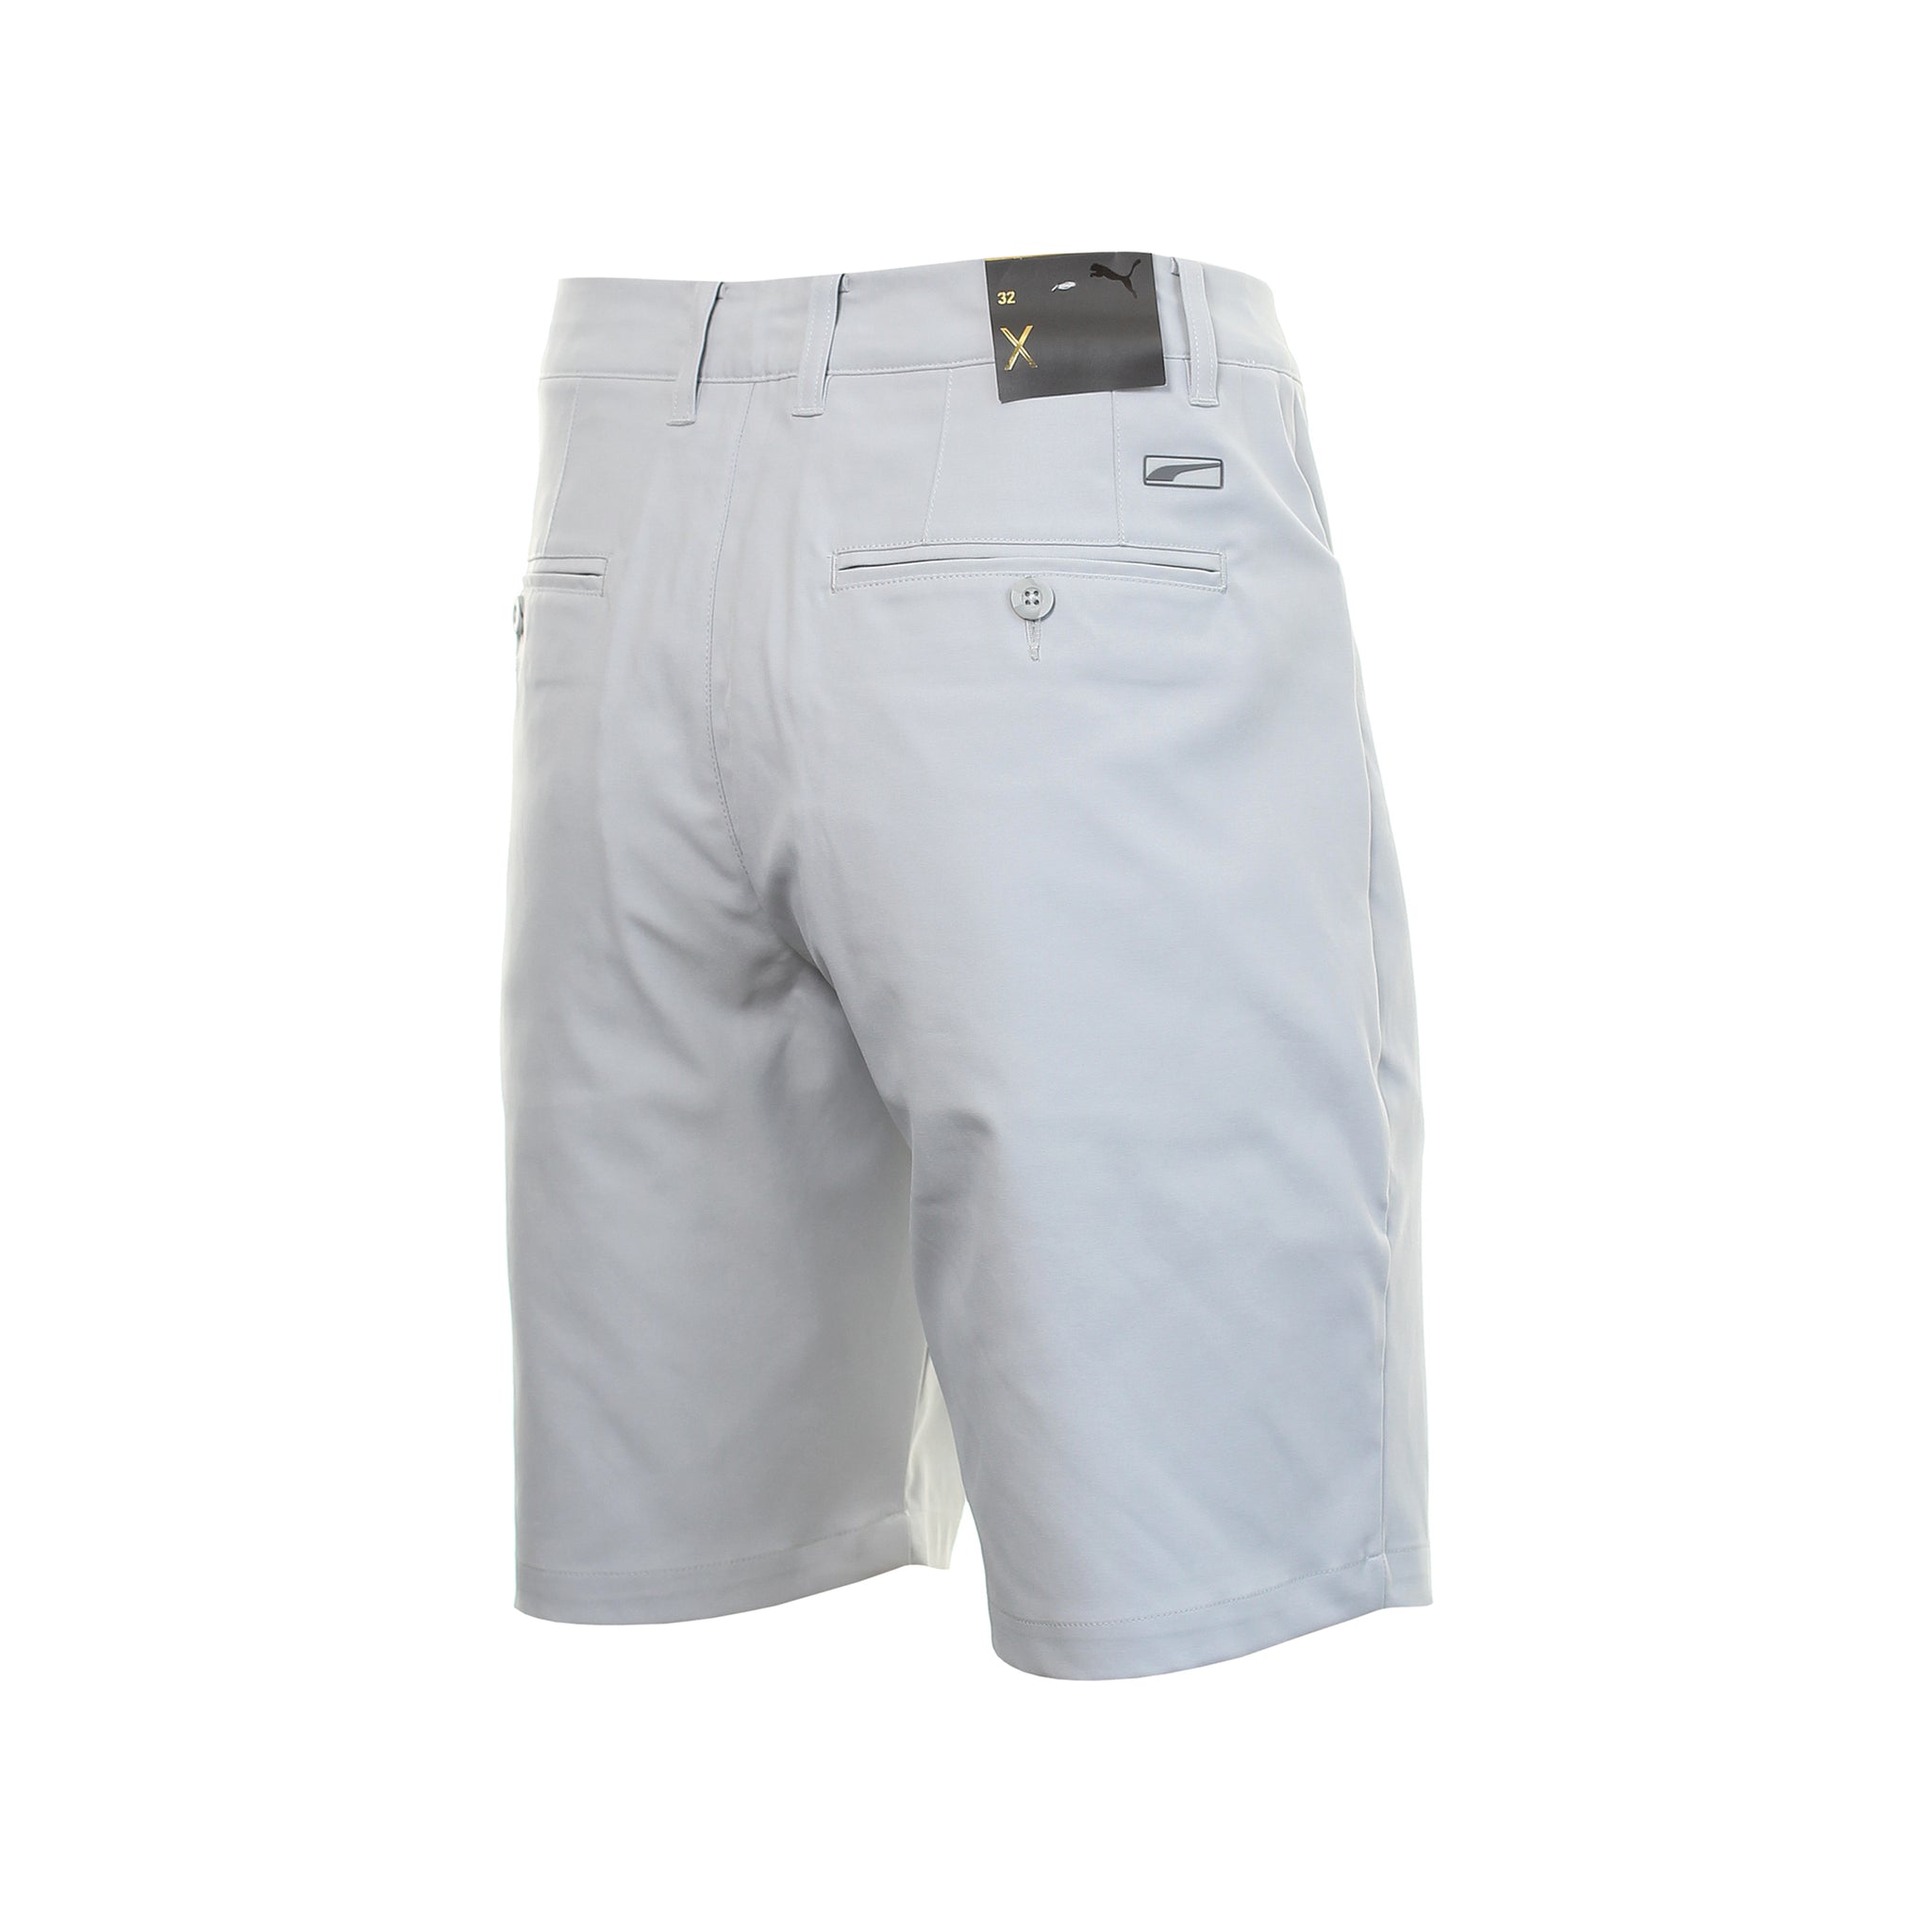 puma-golf-x-jackpot-shorts-531153-high-rise-01